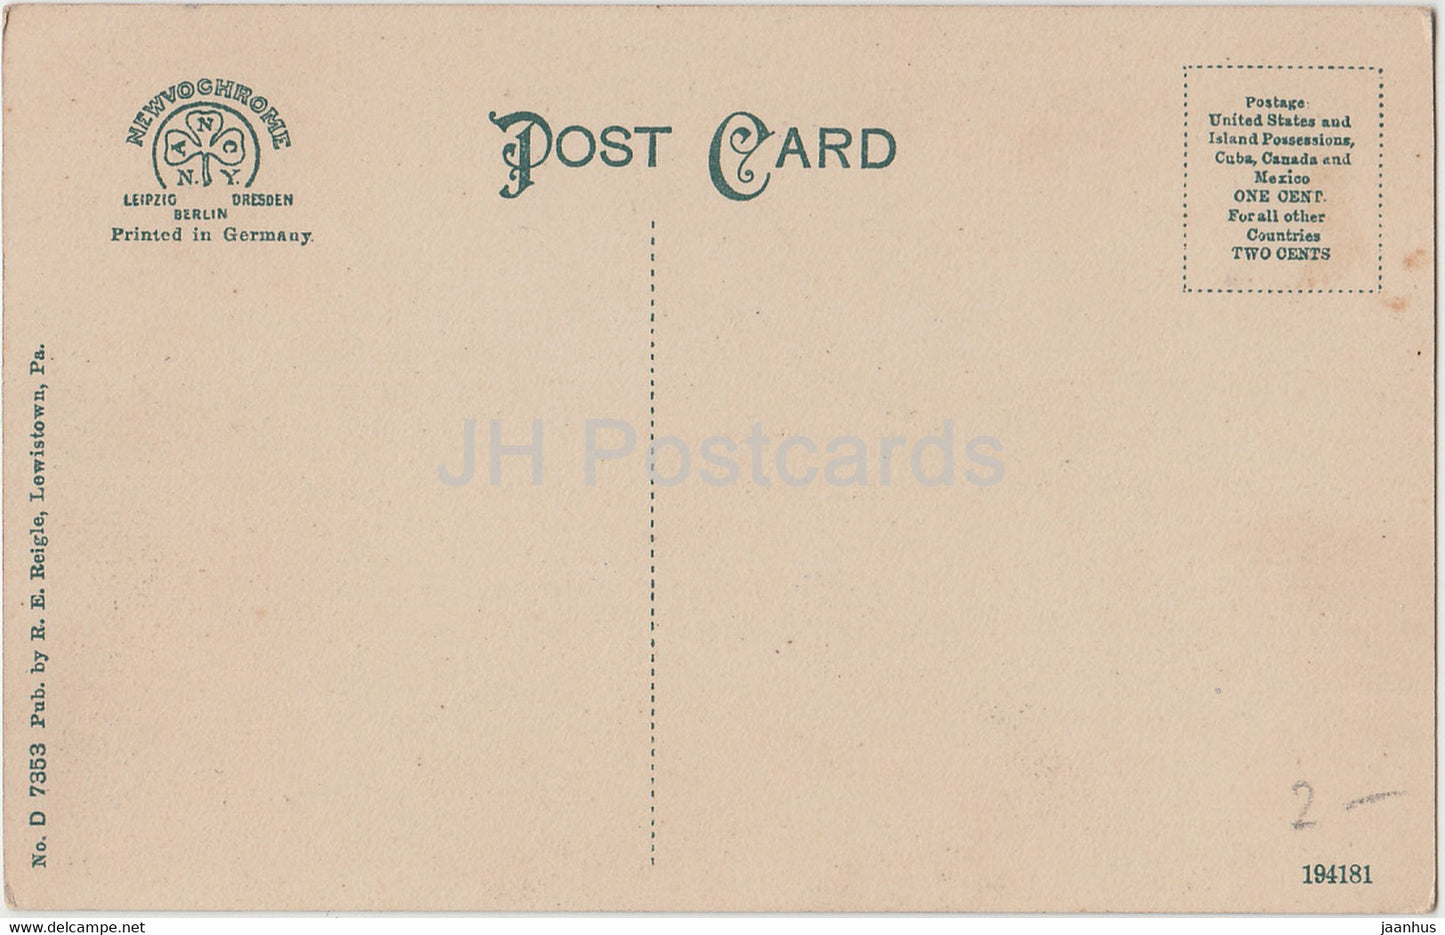 Lewistown - Moonlight on Jacks Creek - PA - 7353 - carte postale ancienne - États-Unis - USA - inutilisé